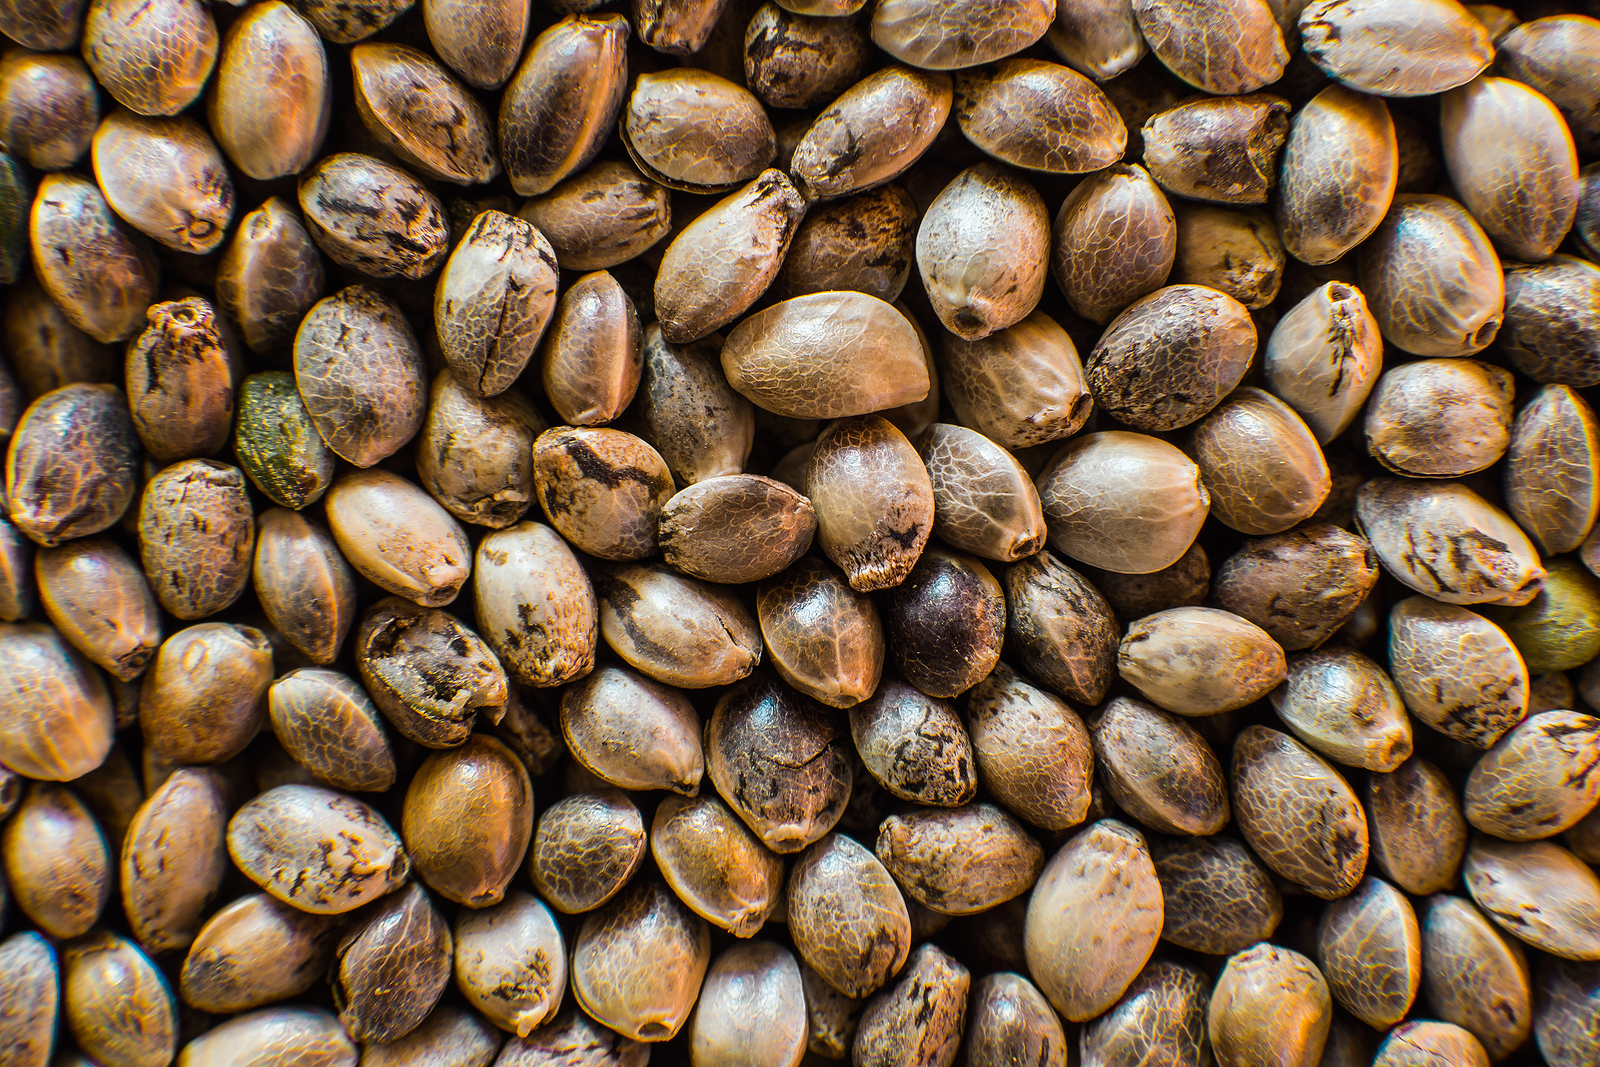 5 Good Reasons Why Buying Marijuana Seeds in Bulk is a Good Idea